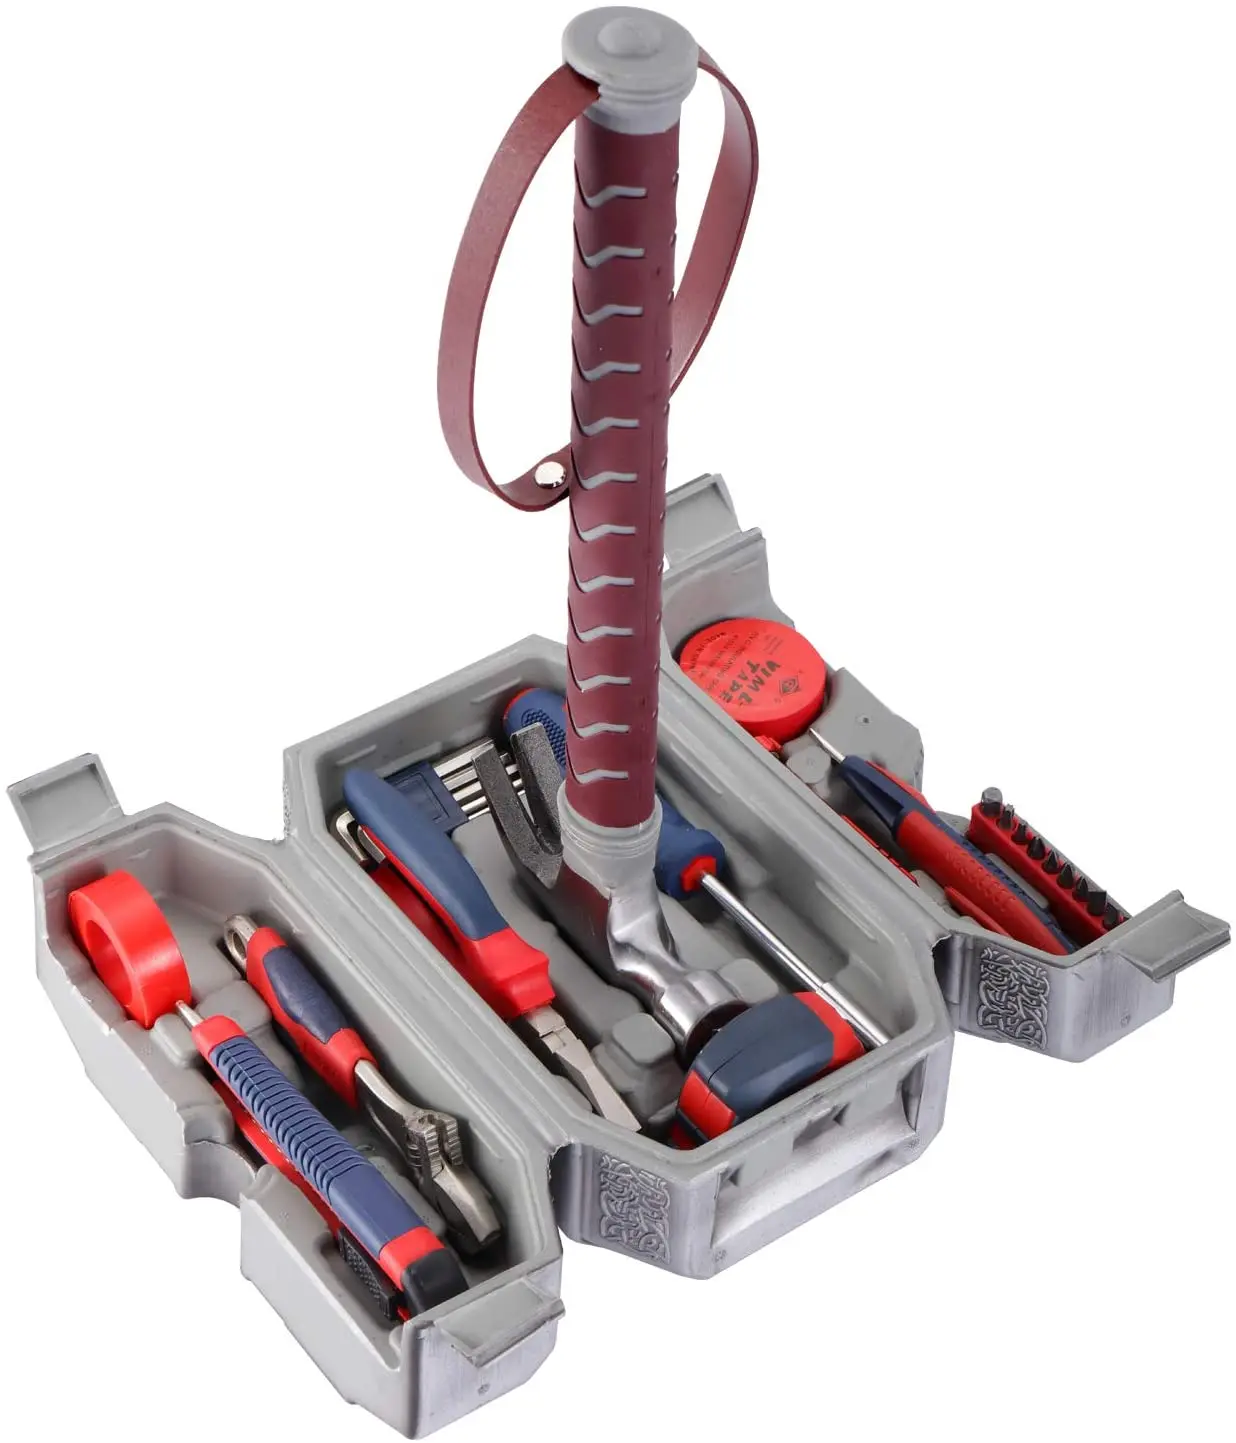 Hammer Tool Kit, Daily Repair Filled Household Tool Case Pliers ect DIY Repair Kits Multi Tools Hammer Accessories Set enlarge